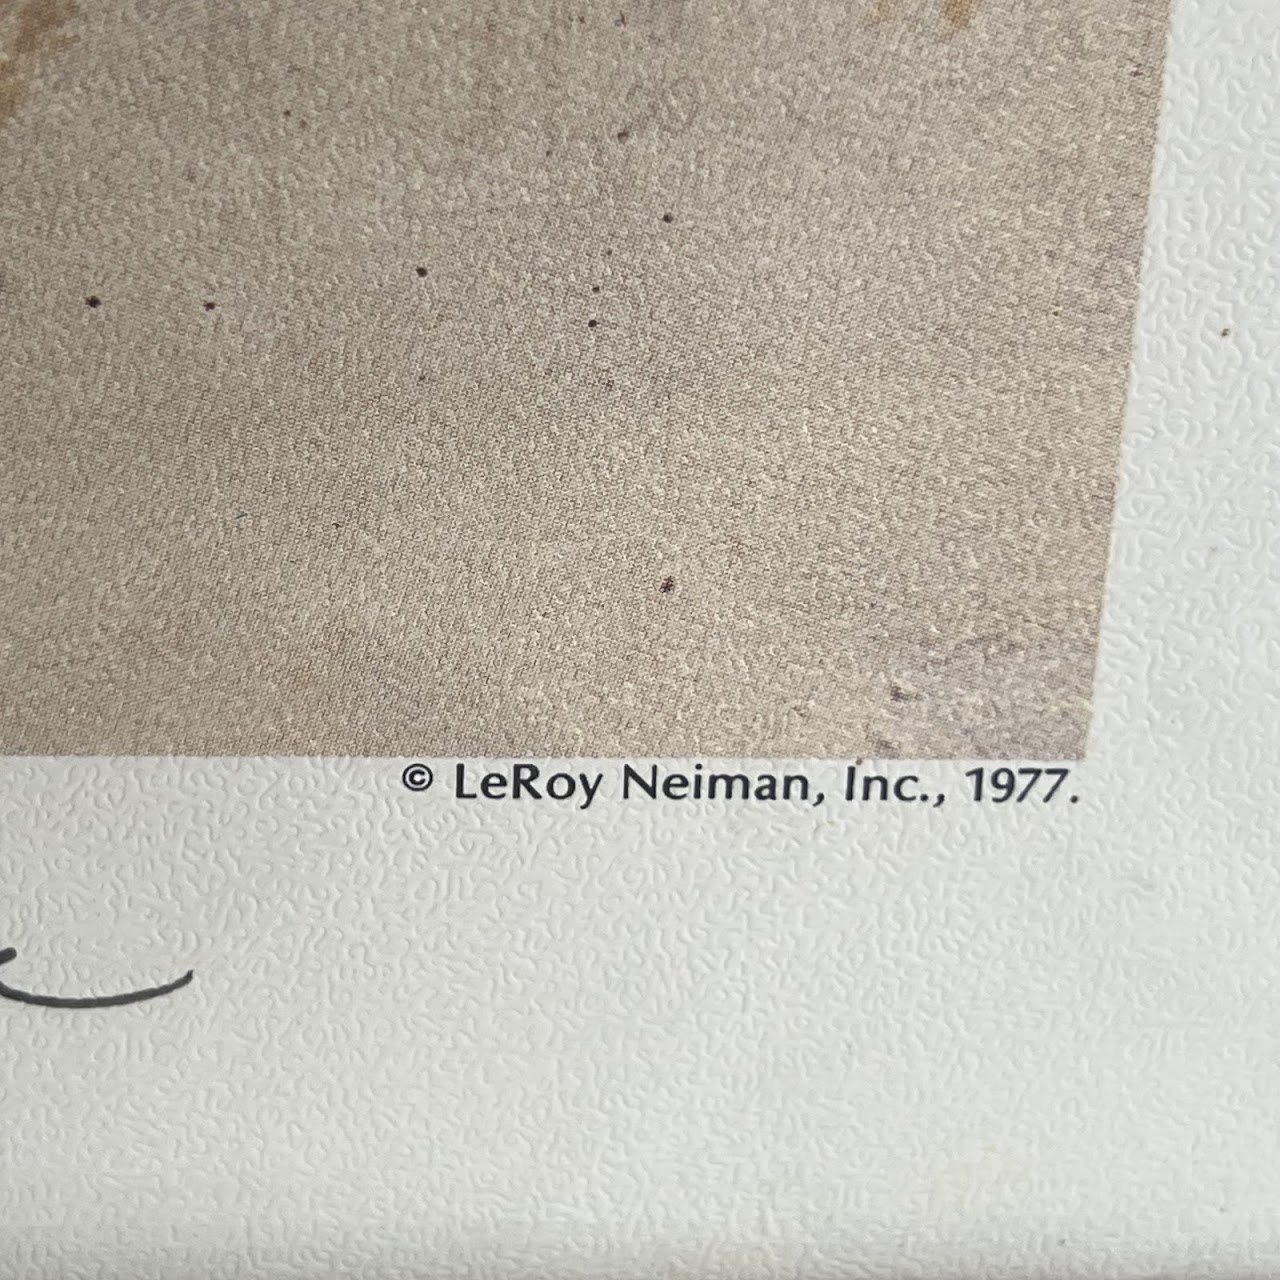 Leroy Neiman 'Stock Market' Signed Poster